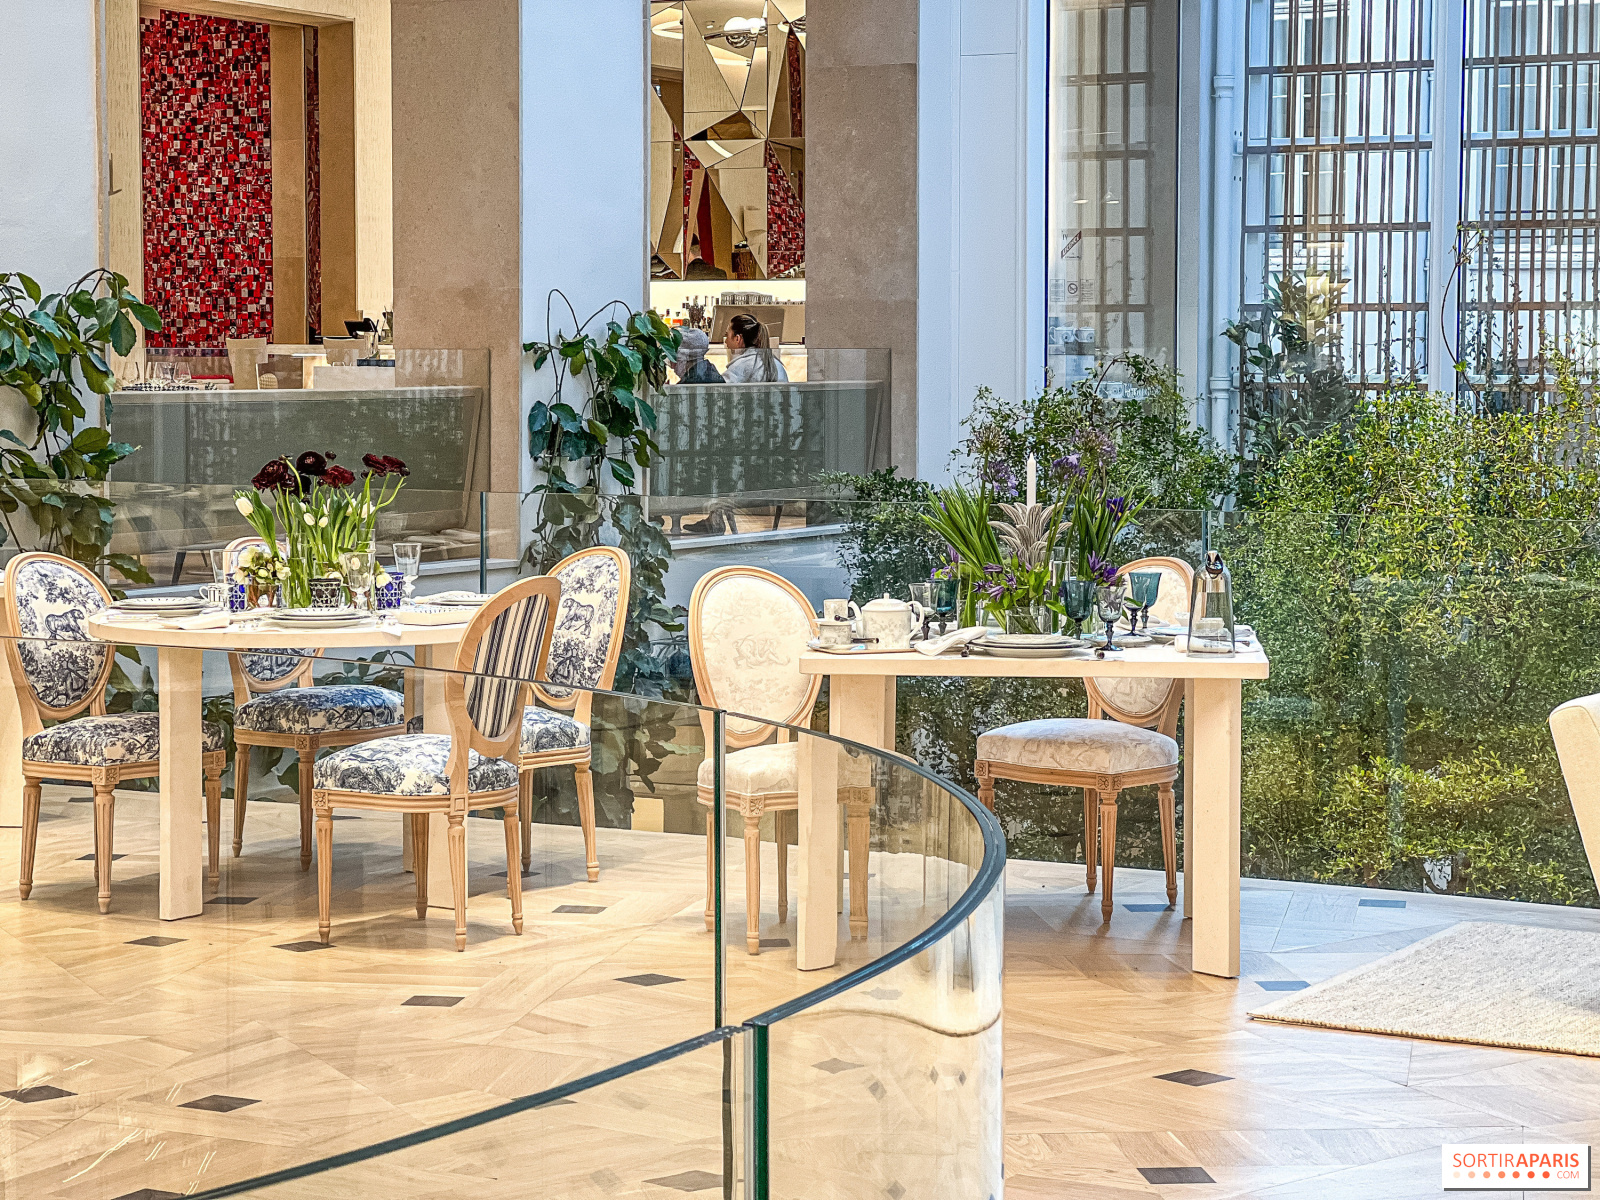 Dior Paris 30 Montaigne, store – museum, café and restaurant, opens 